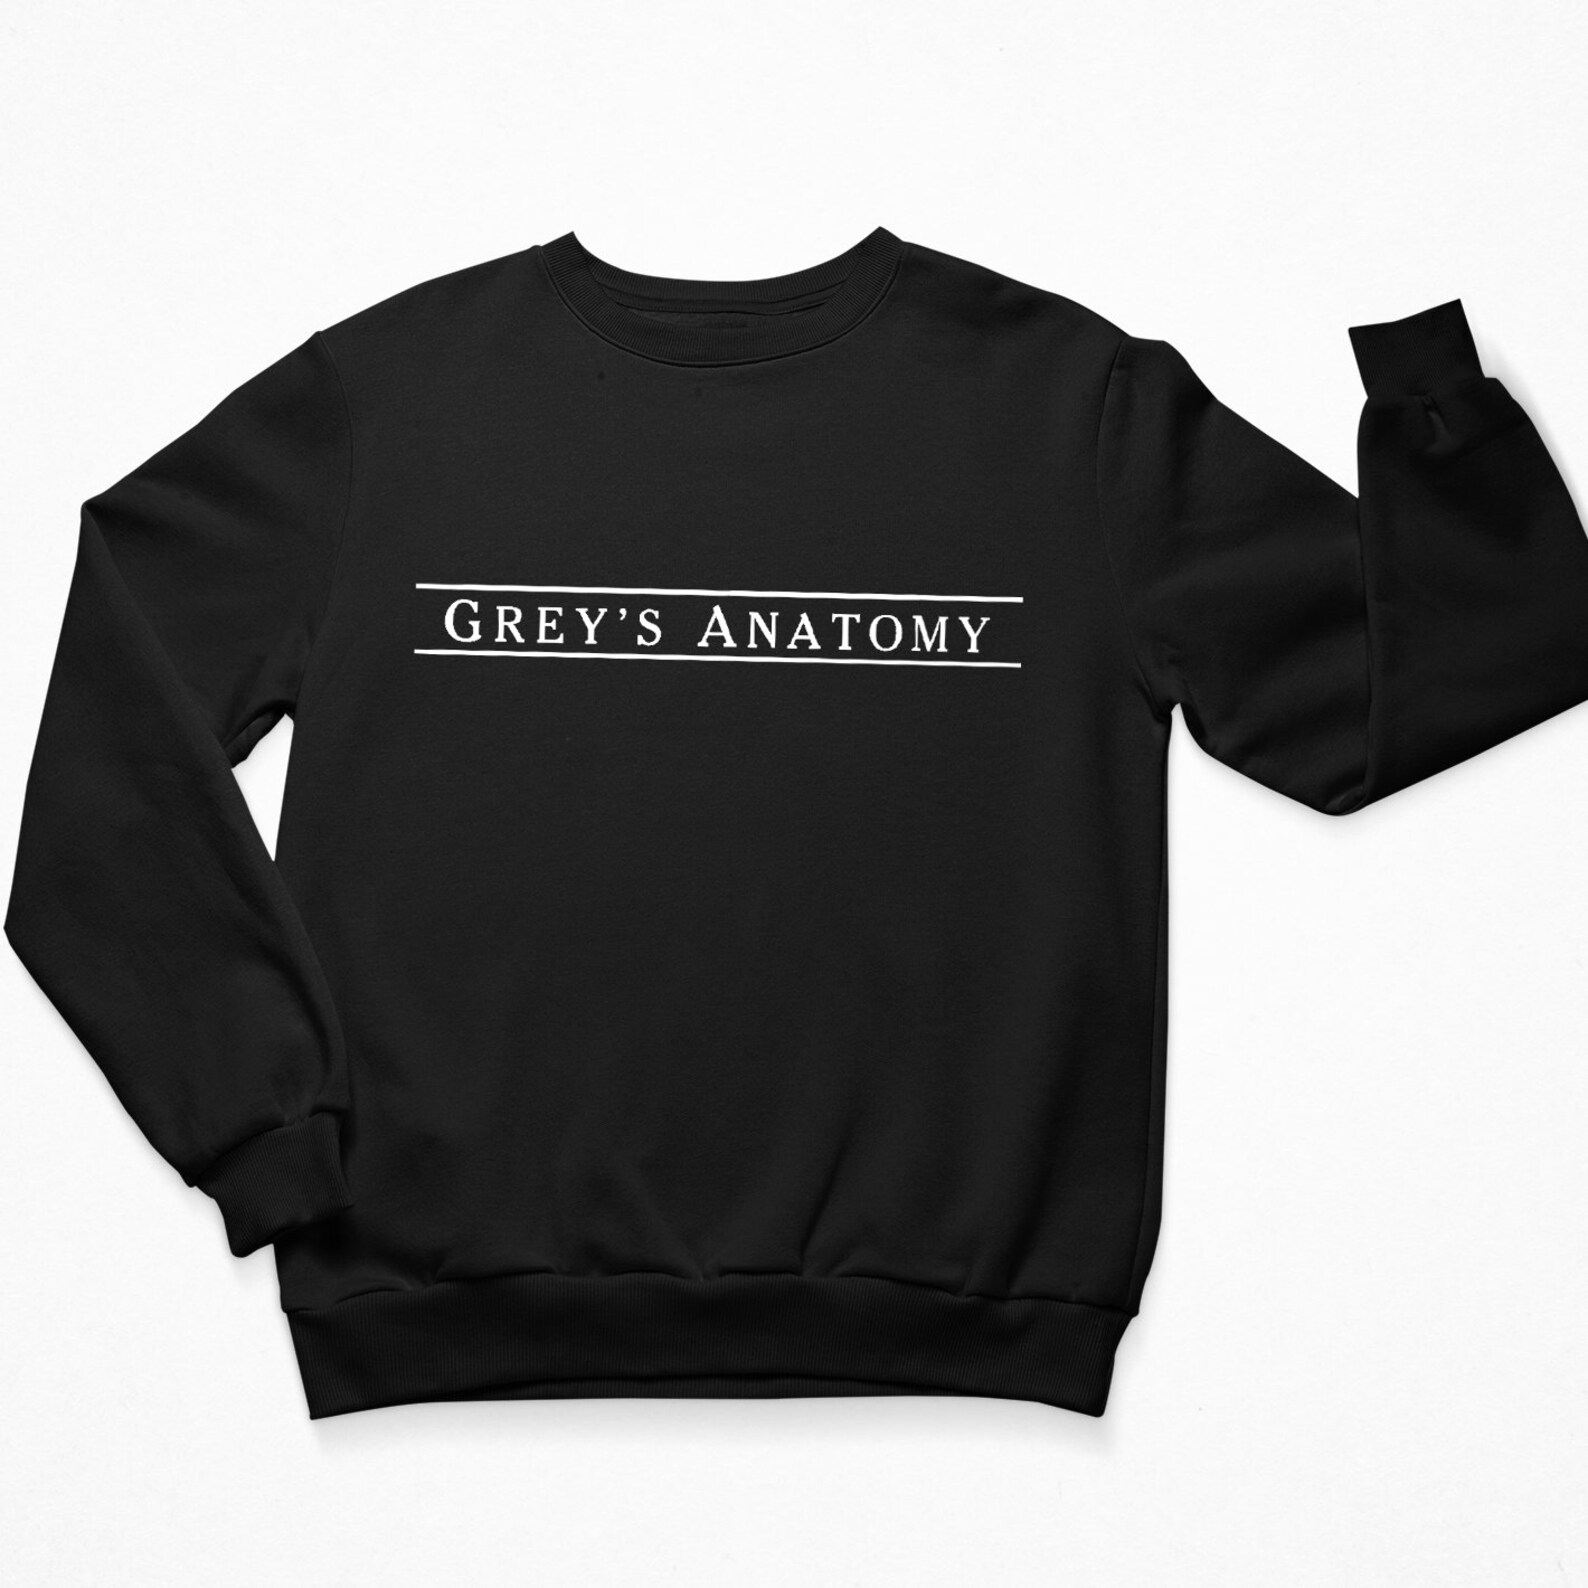 Grey's Anatomy Crewneck Sweatshirt Adult Unisex | Etsy